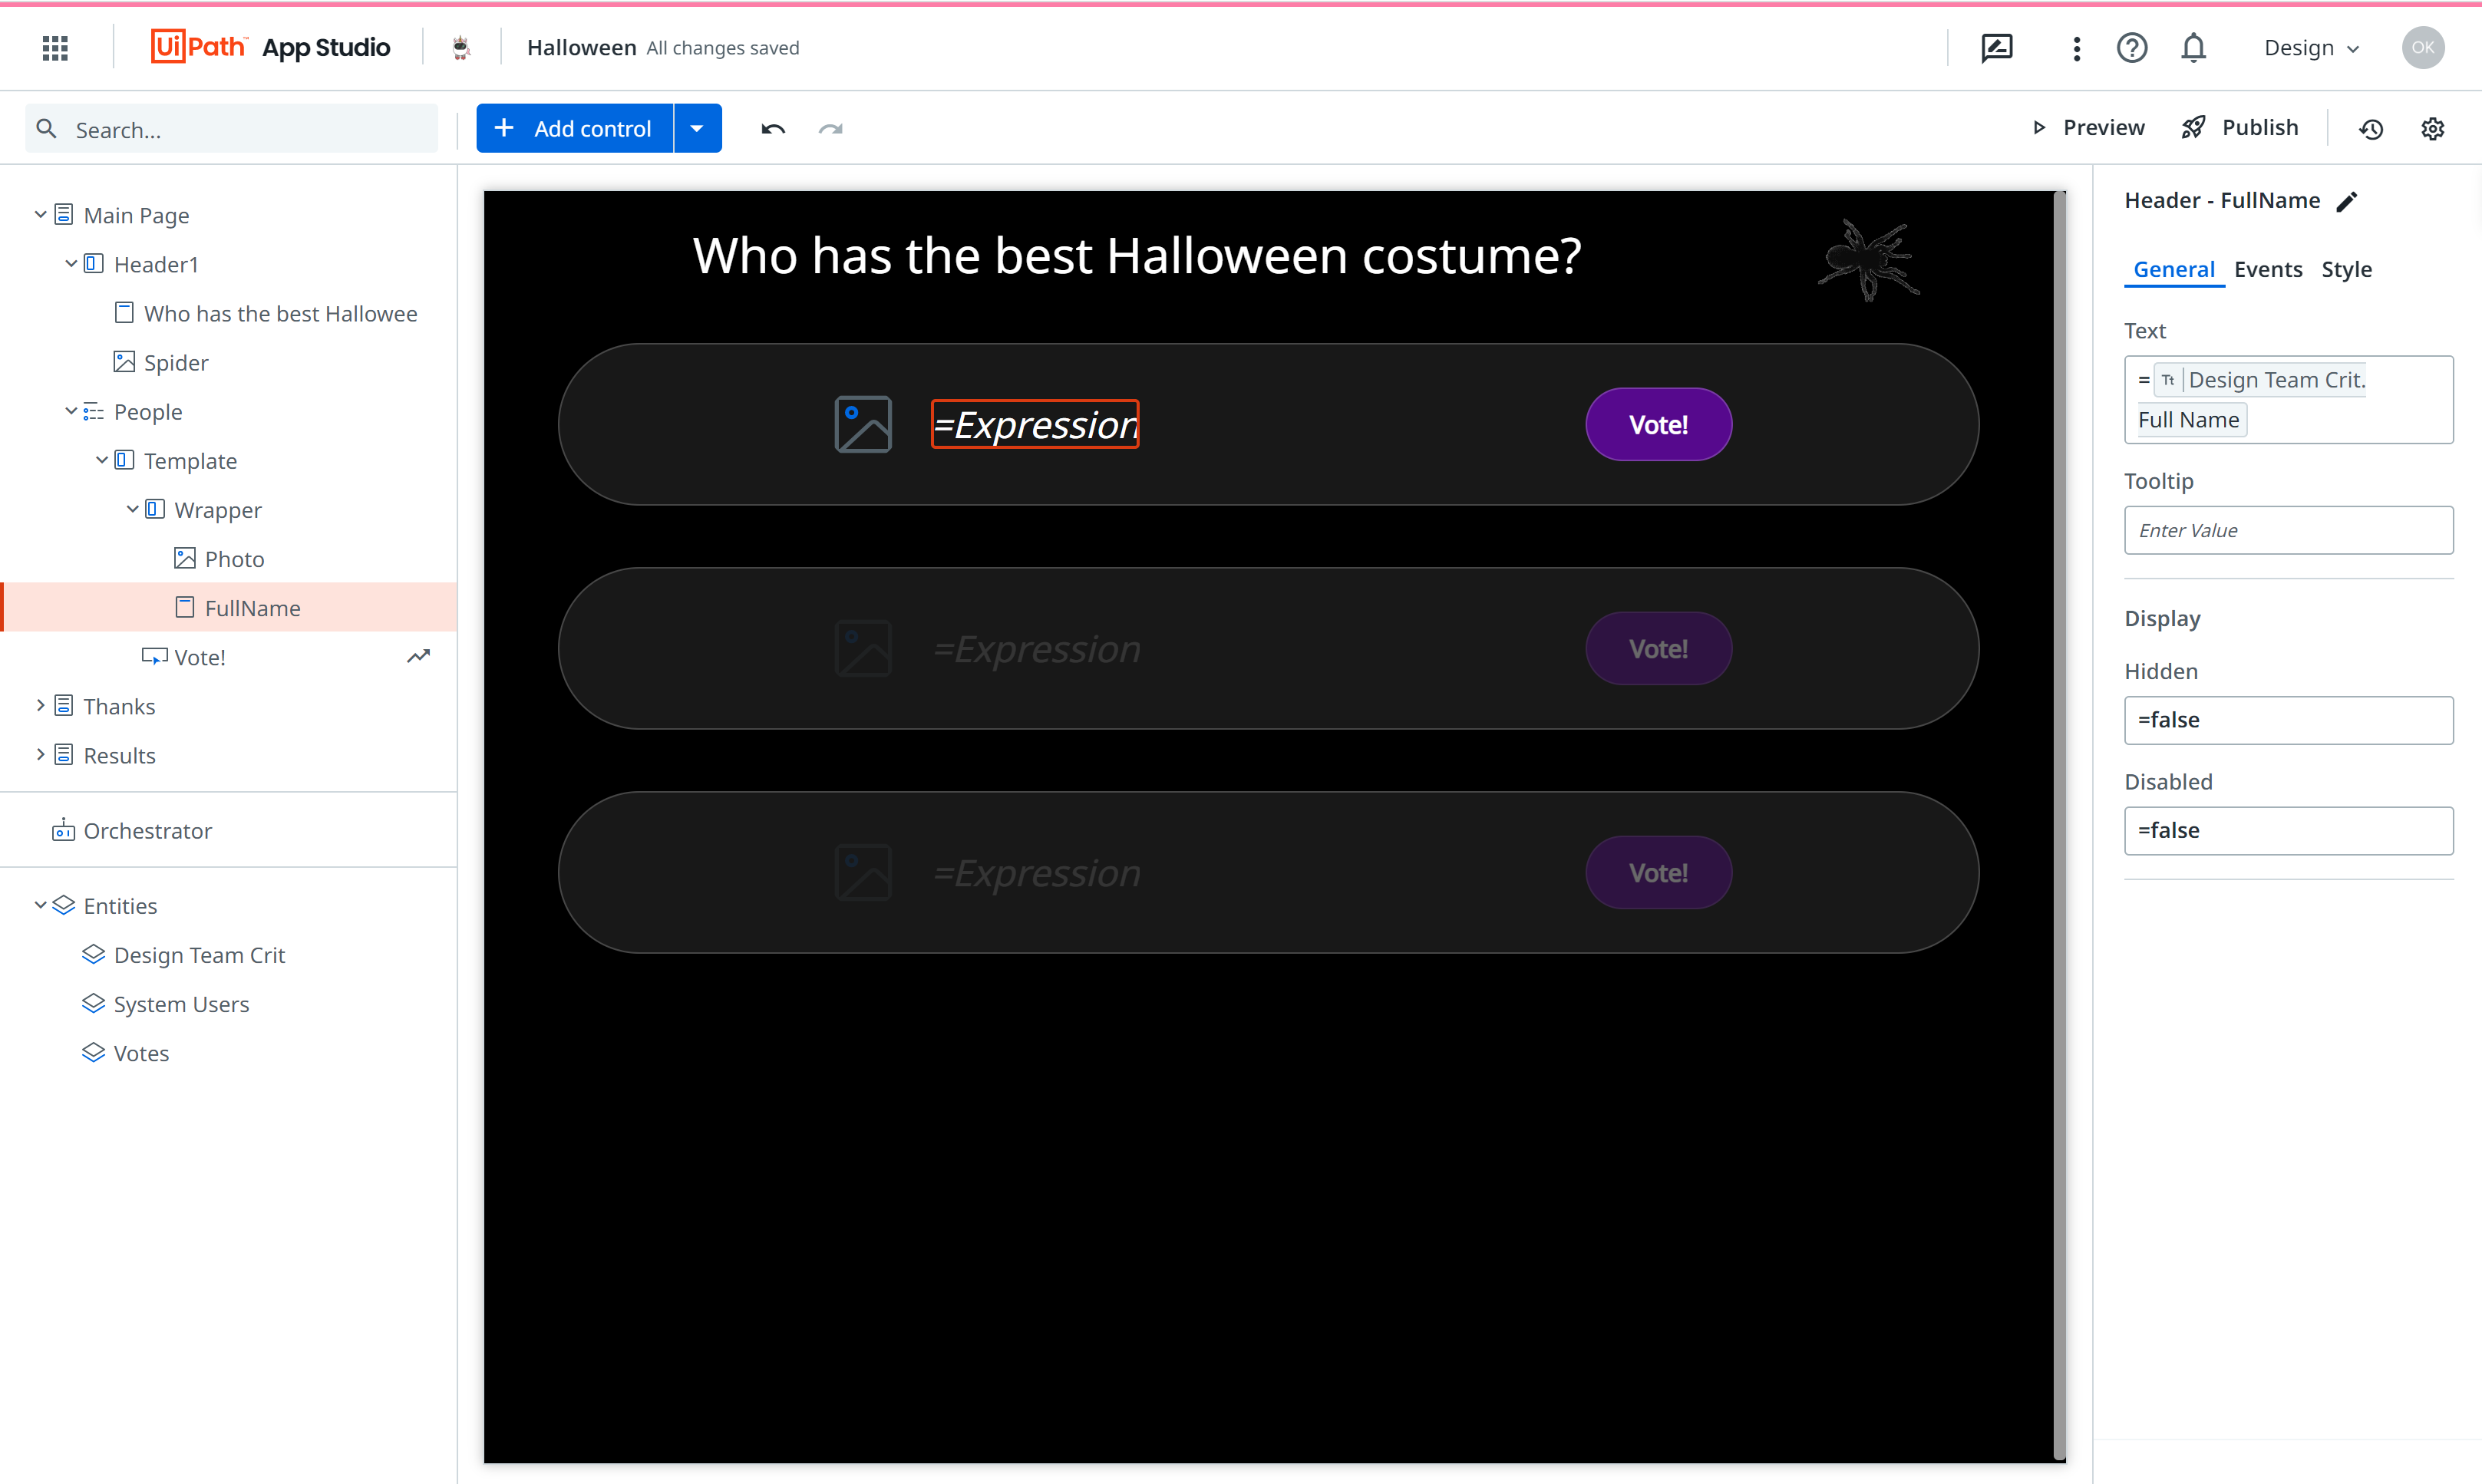 citizen developer made halloween costume voting app UiPath Apps